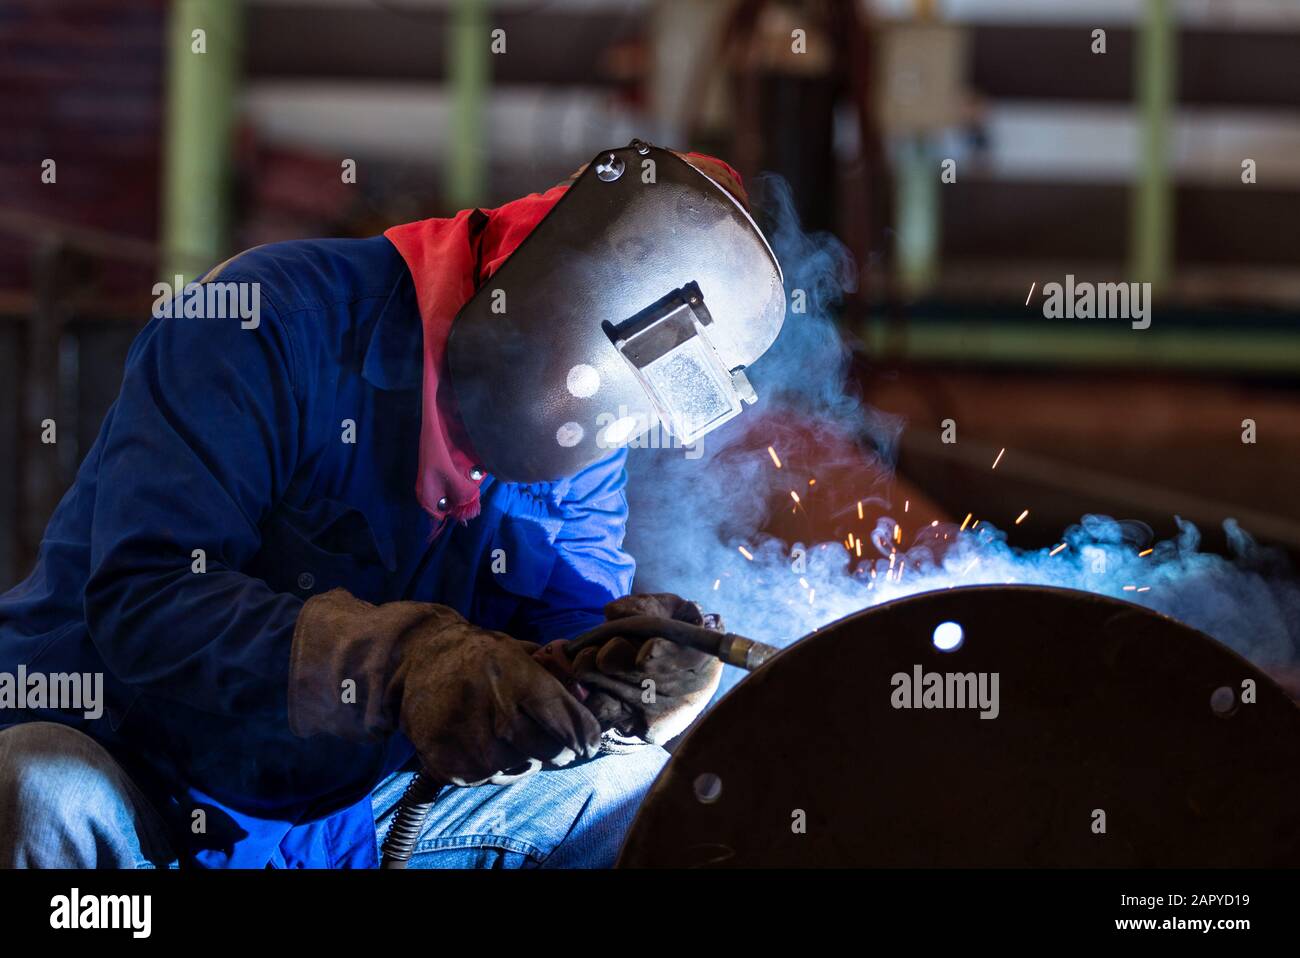 Welding work. Stock Photo